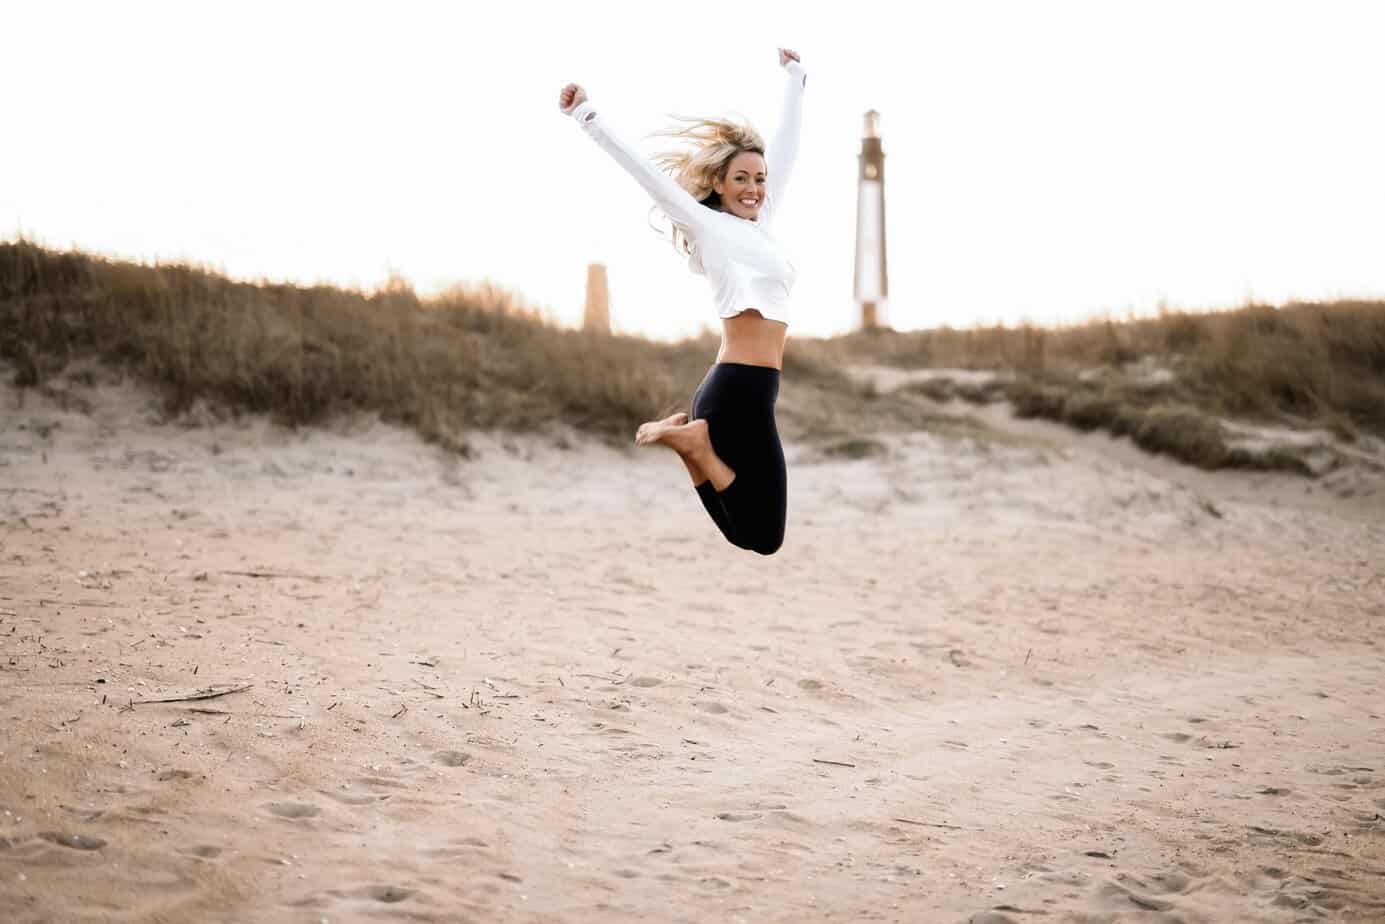 Amanda Cabrera-Crowe Elev8 Fit Mom jumping on the beach